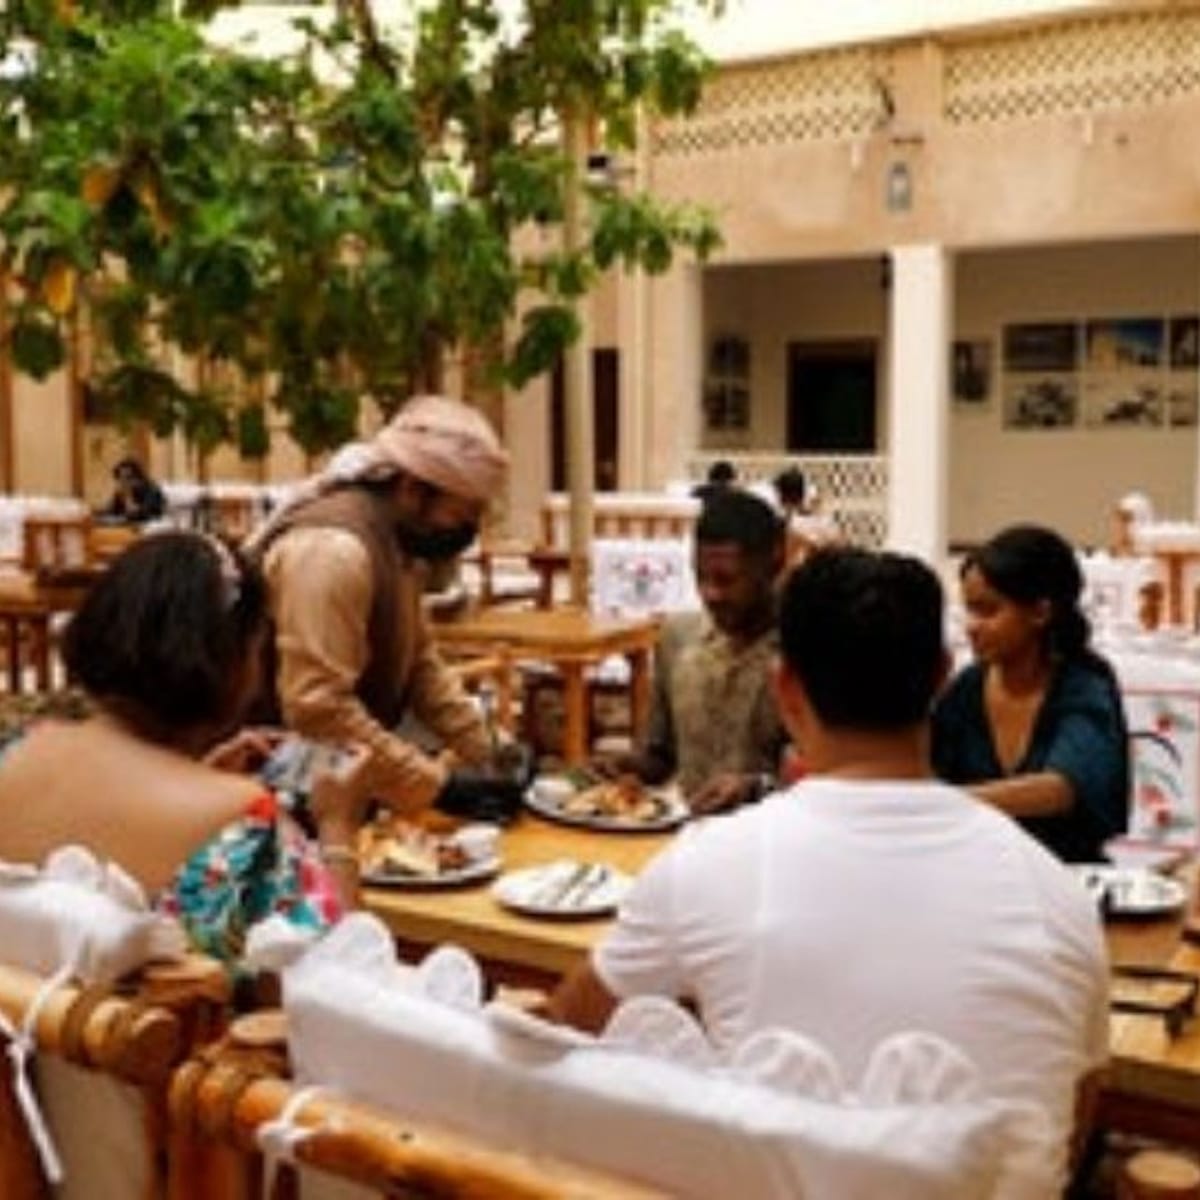 ethnic-emirati-cuisine-at-al-khayma-heritage-house_1